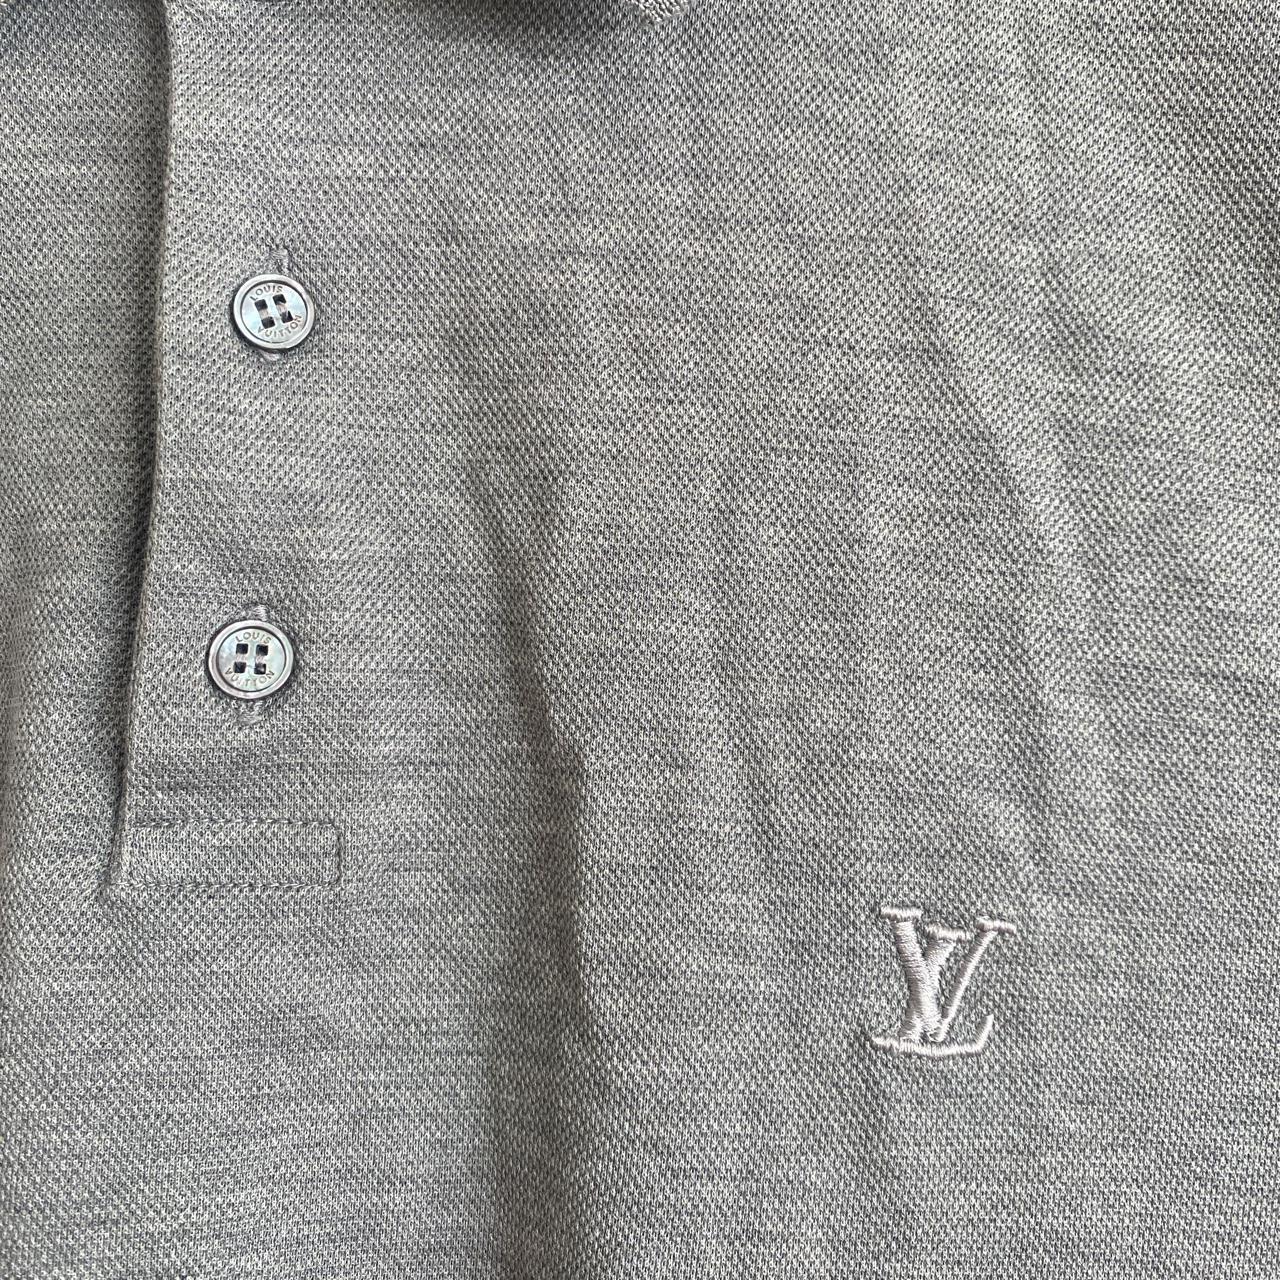 Authentic Vintage 80s Louis Vuitton Polo, in perfect - Depop